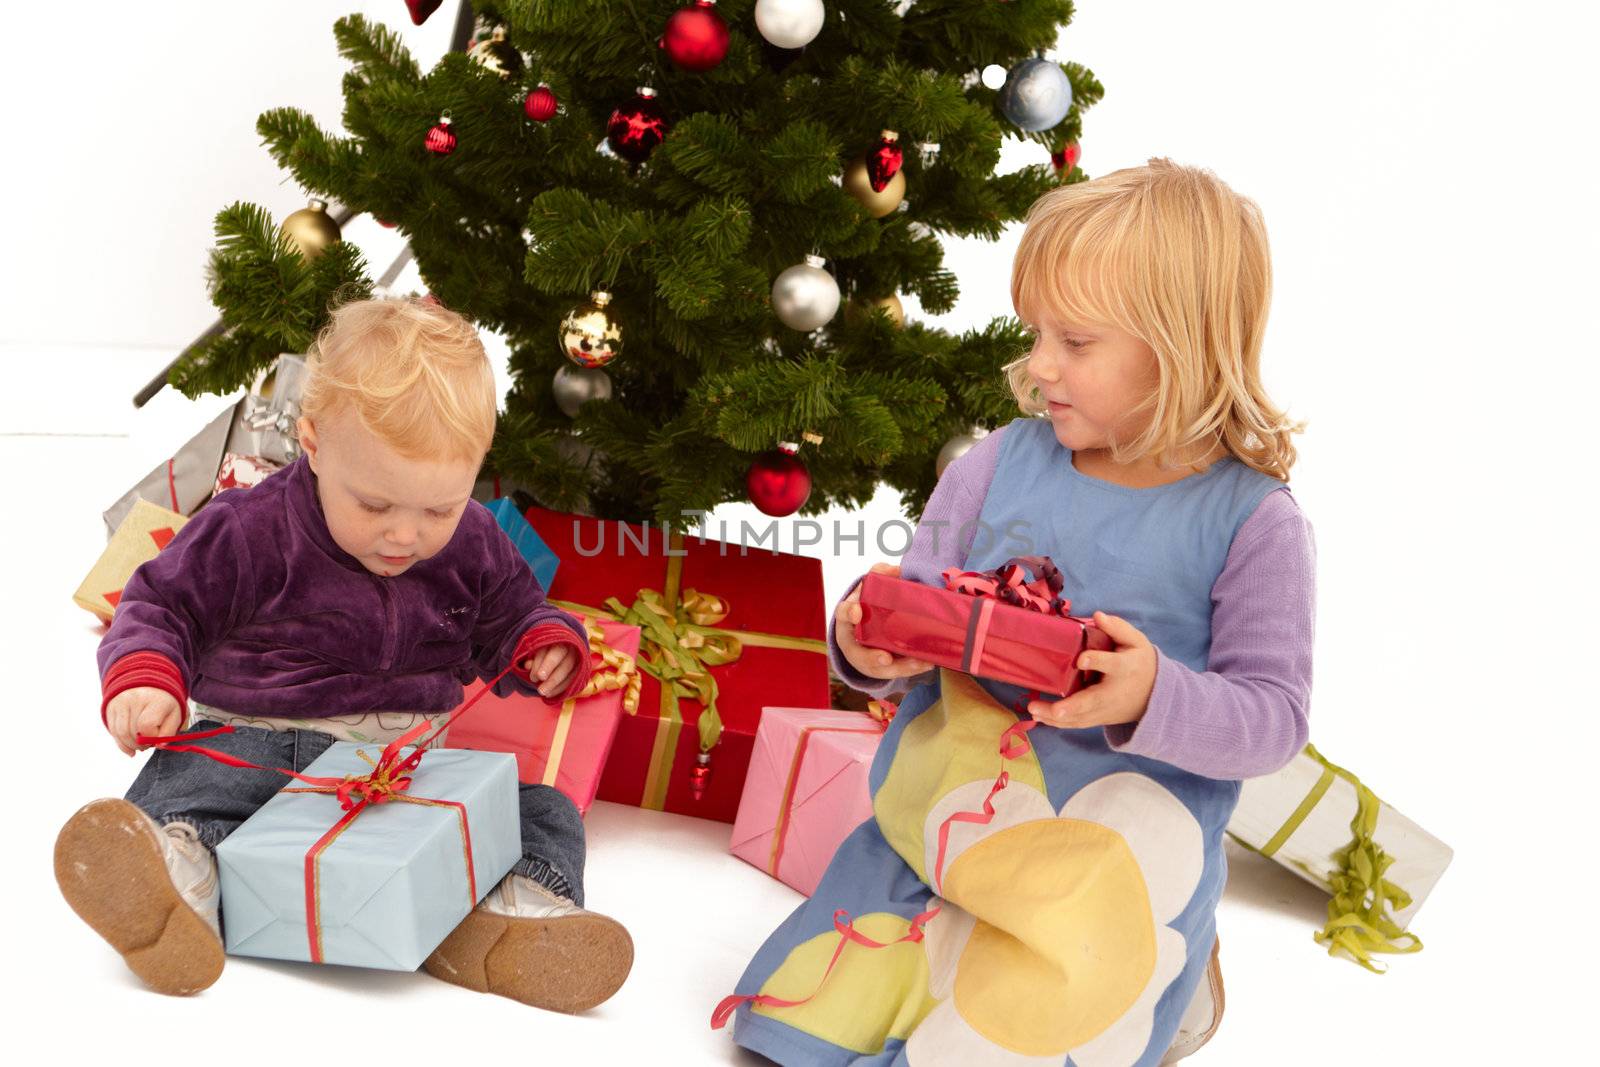 Christmas - Kids opening presents under x-mas tree